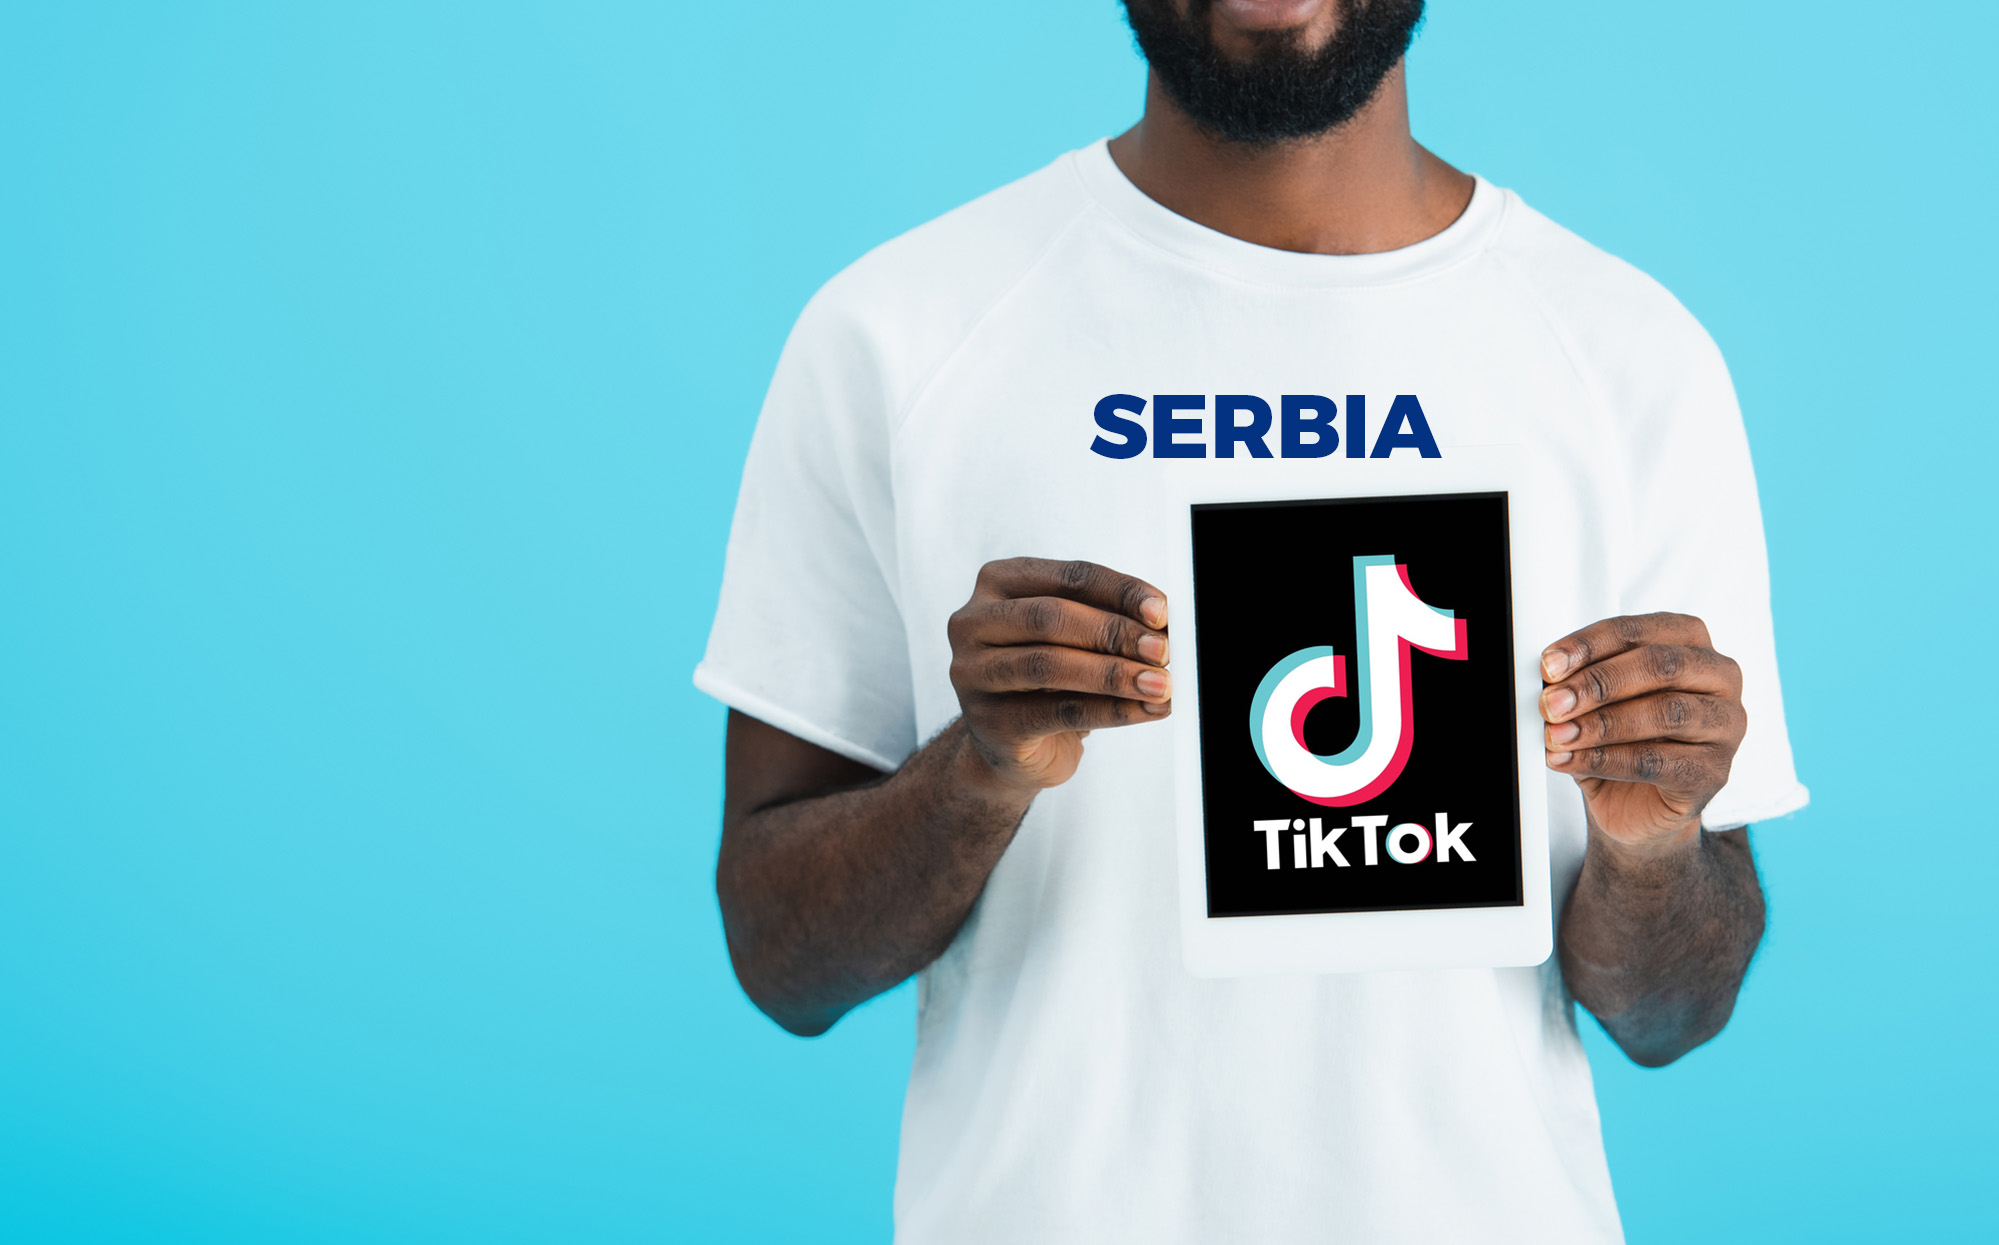 Most popular TikTokers in Serbia